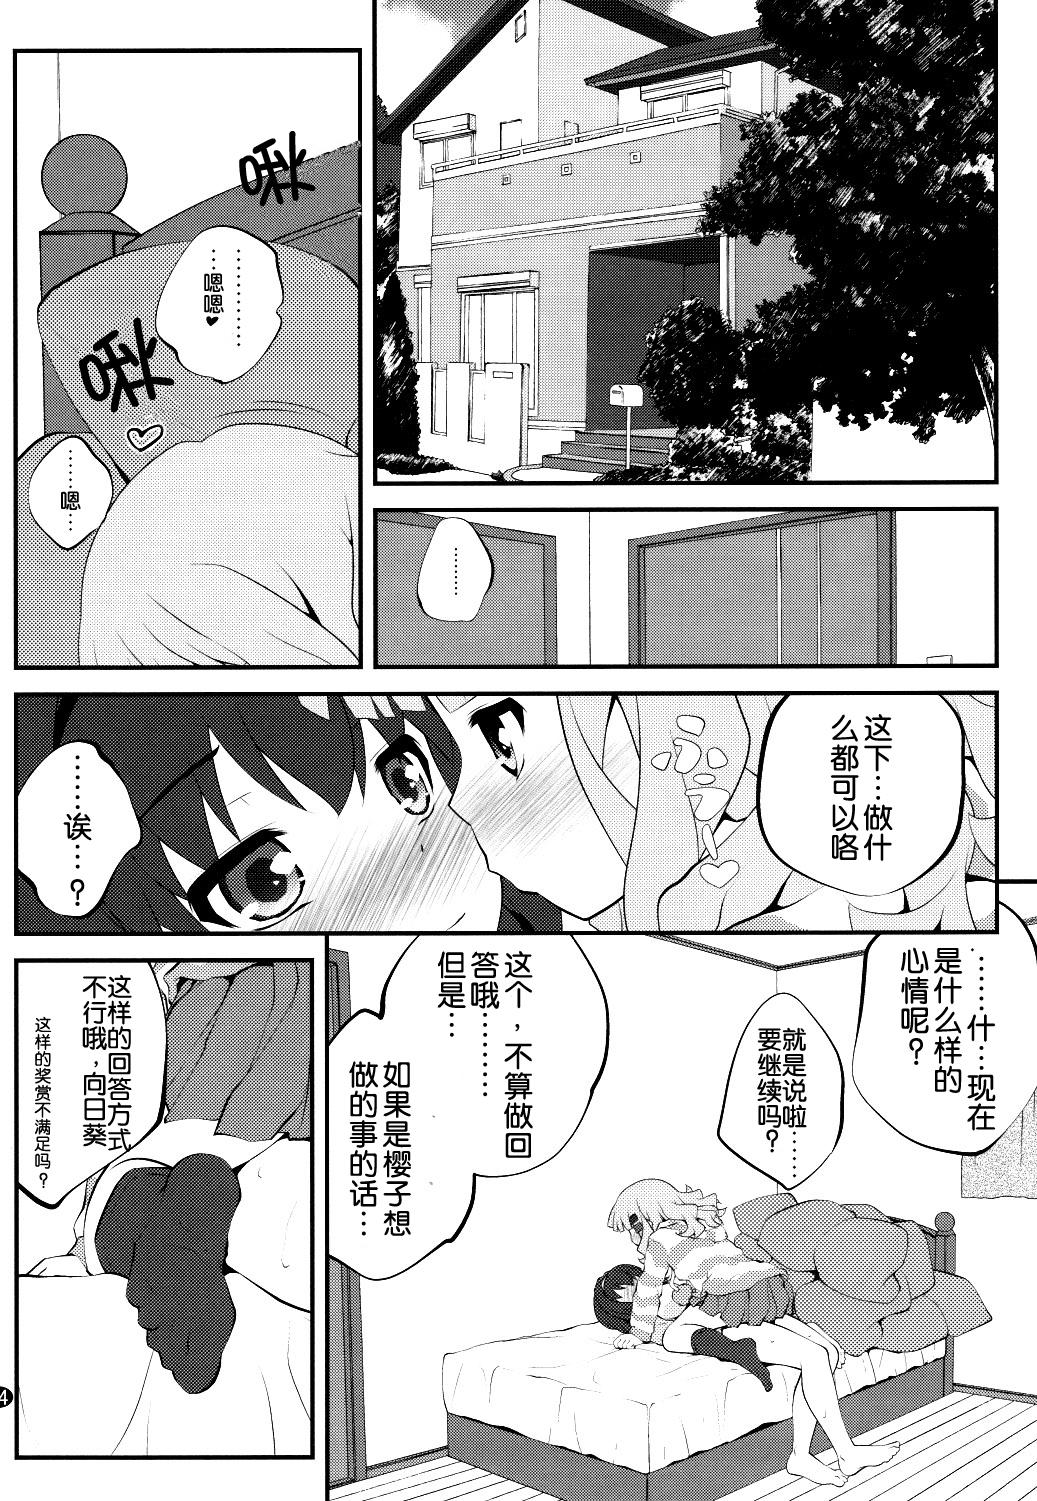 Moan Himegoto Flowers 7 - Yuruyuri Casa - Page 4